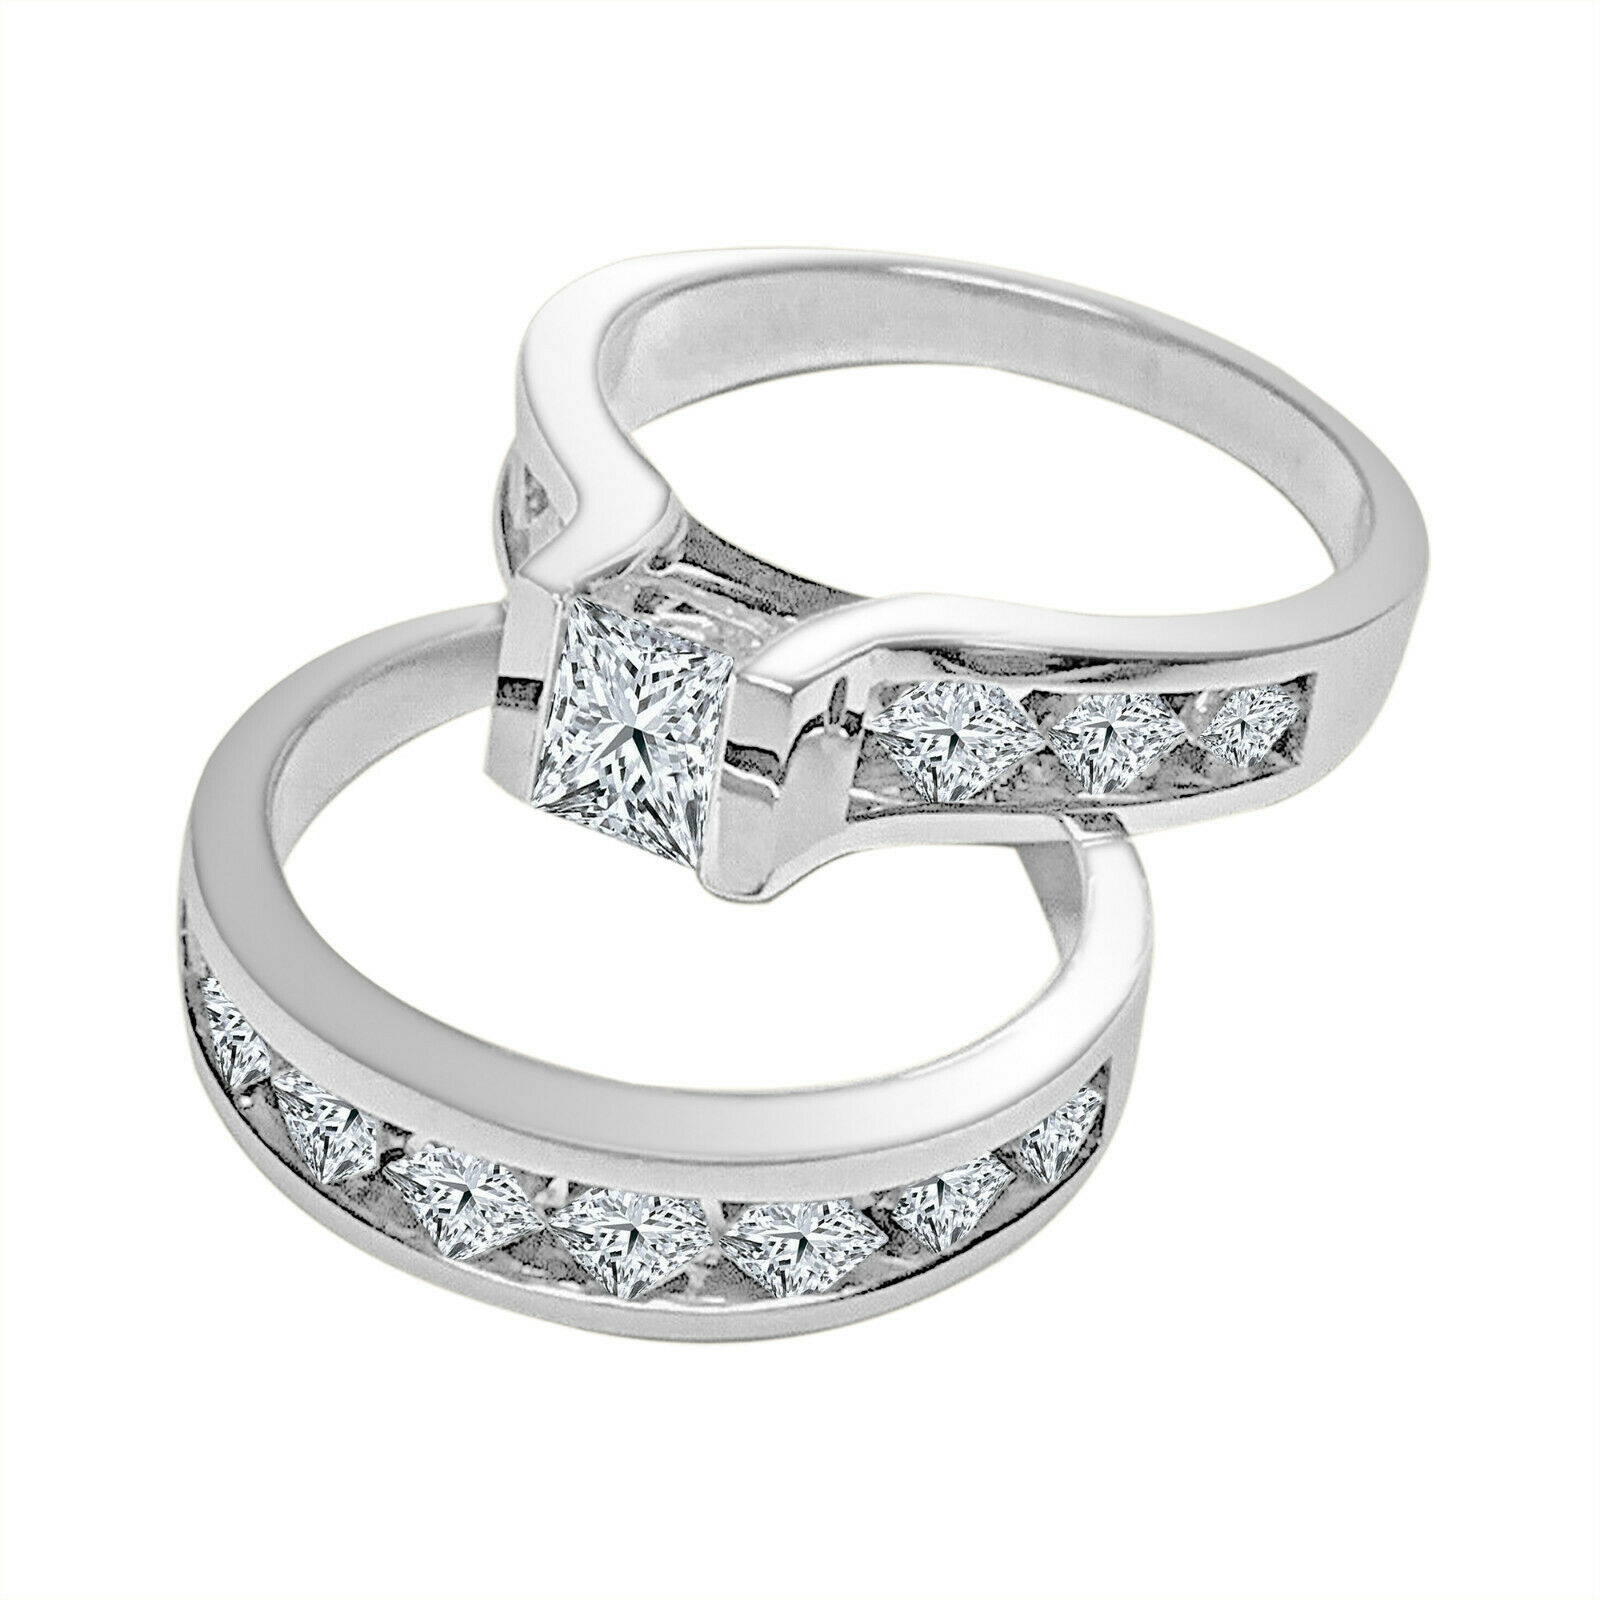 3.00ct Princess Cut Diamond Engagement Ring Wedding Band 14k White Gold Over